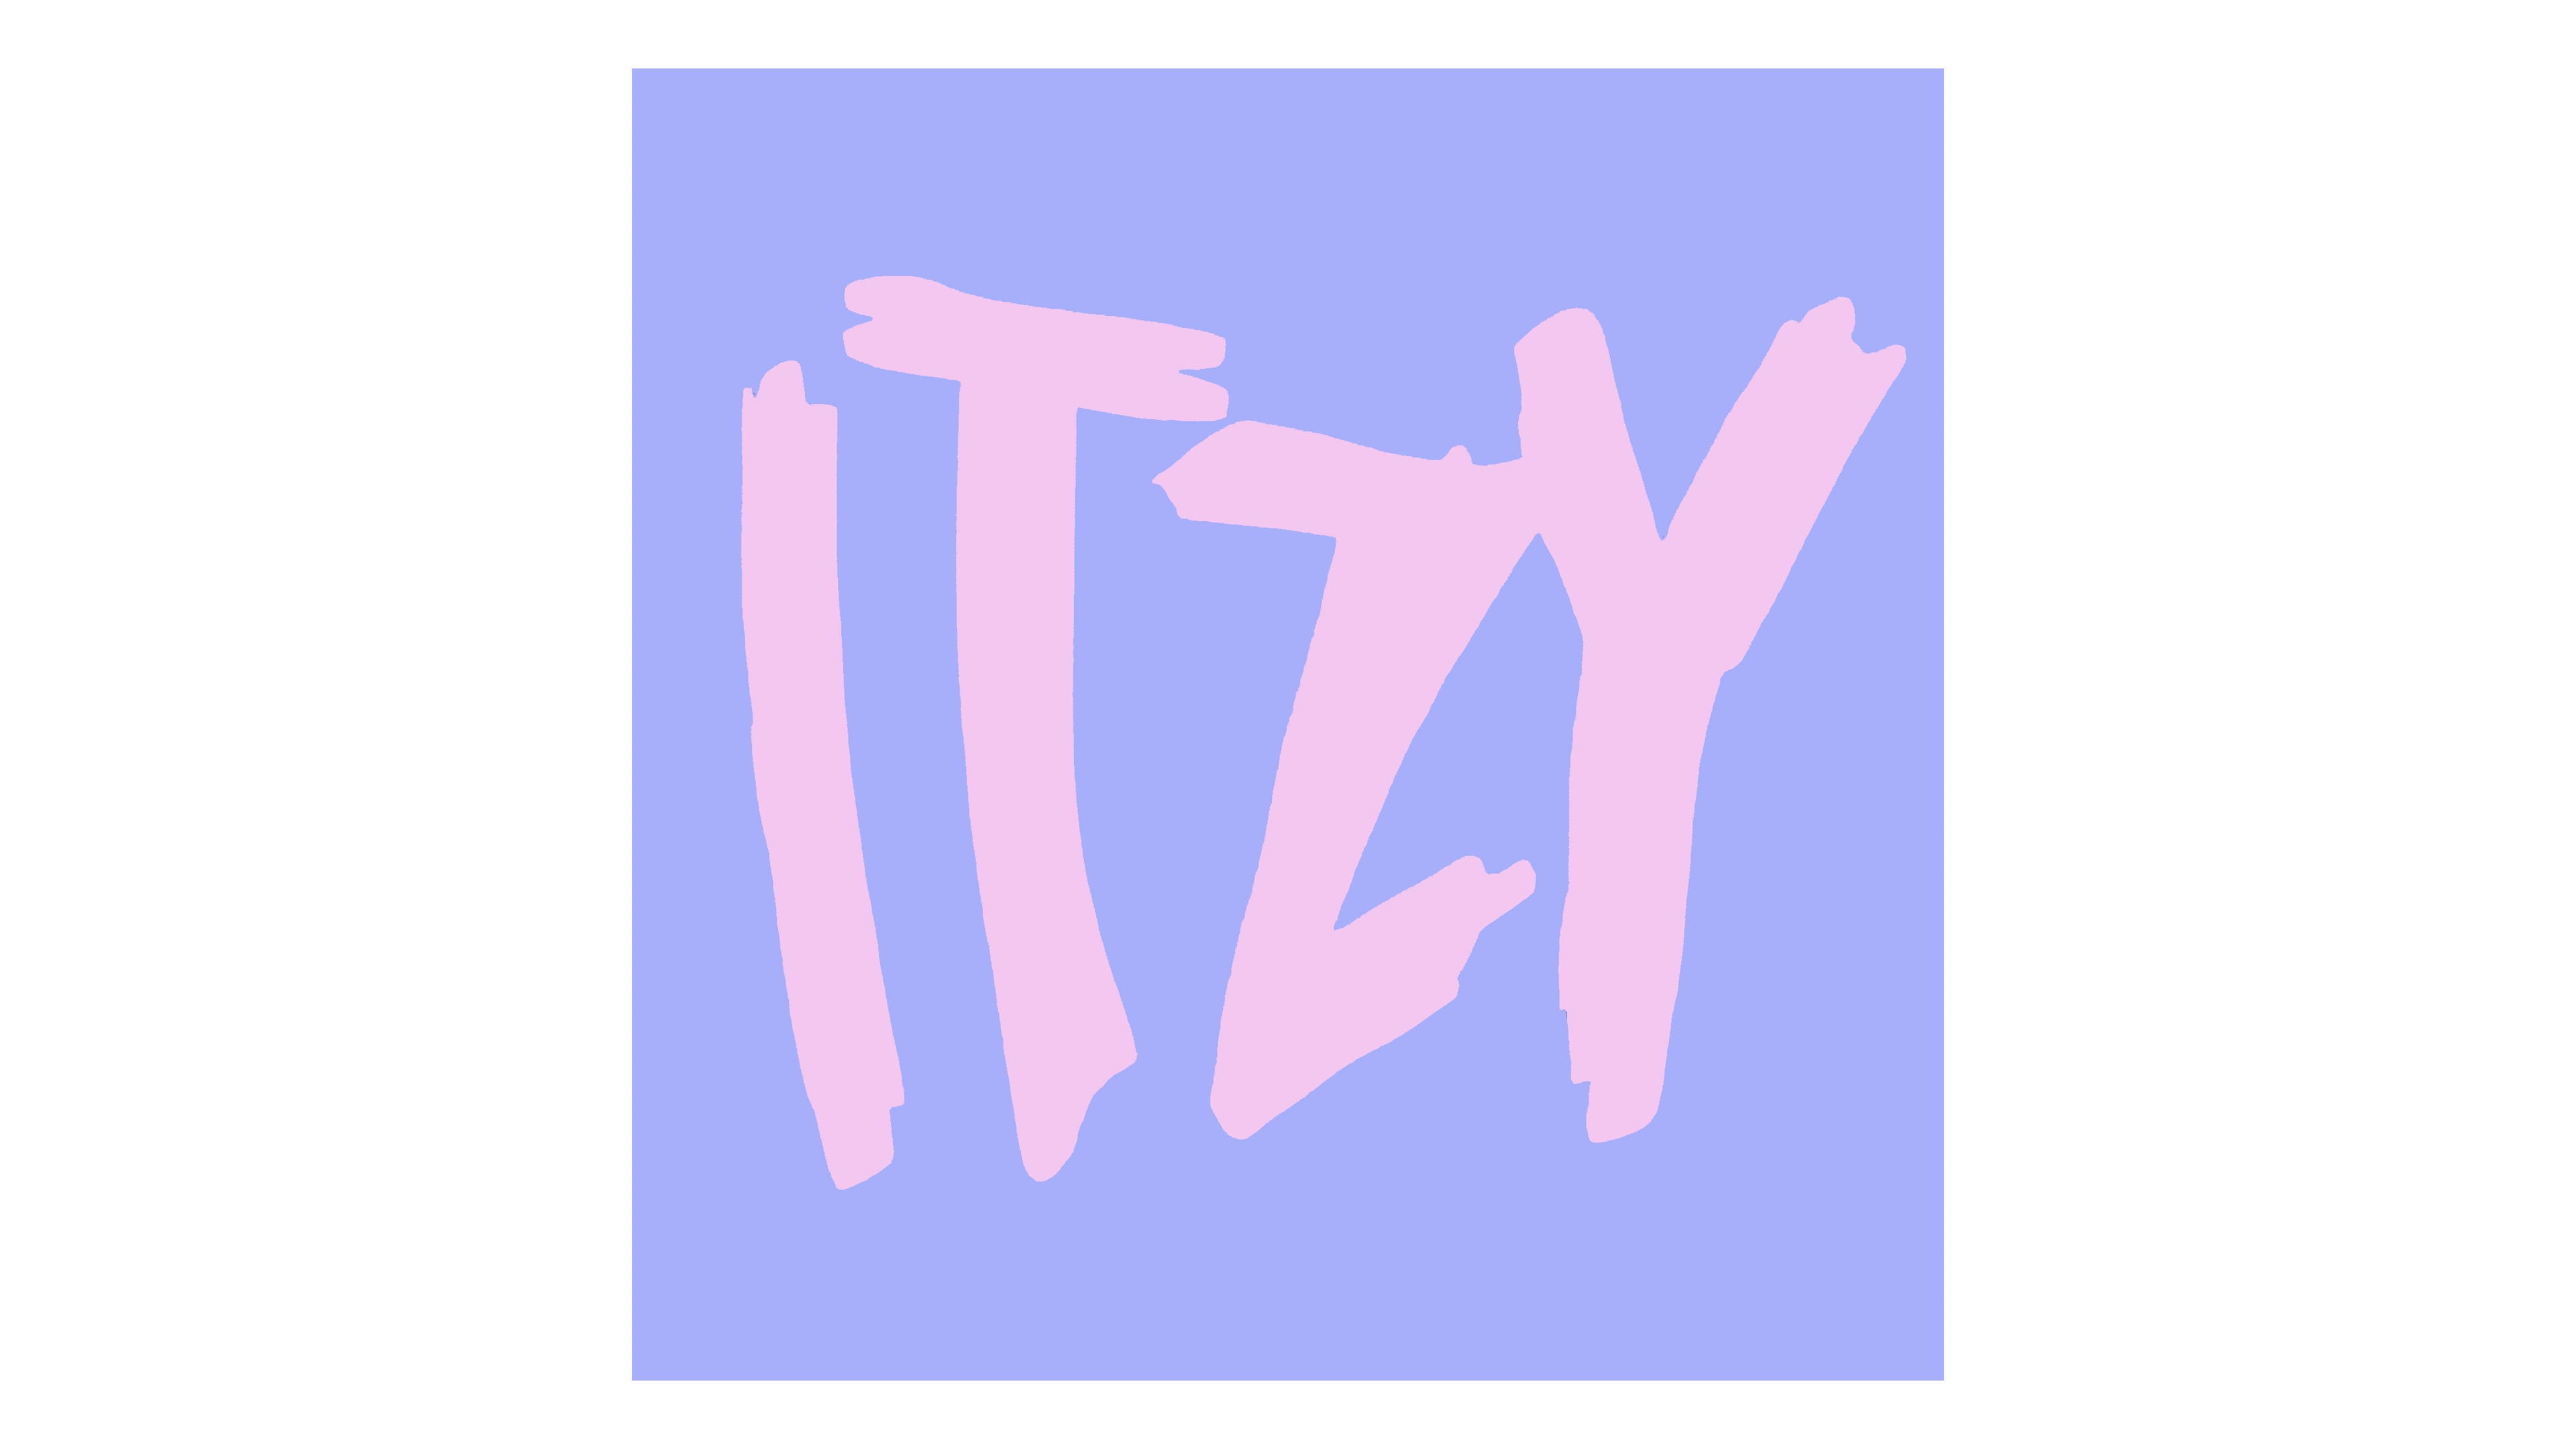 ITZY - YouTube